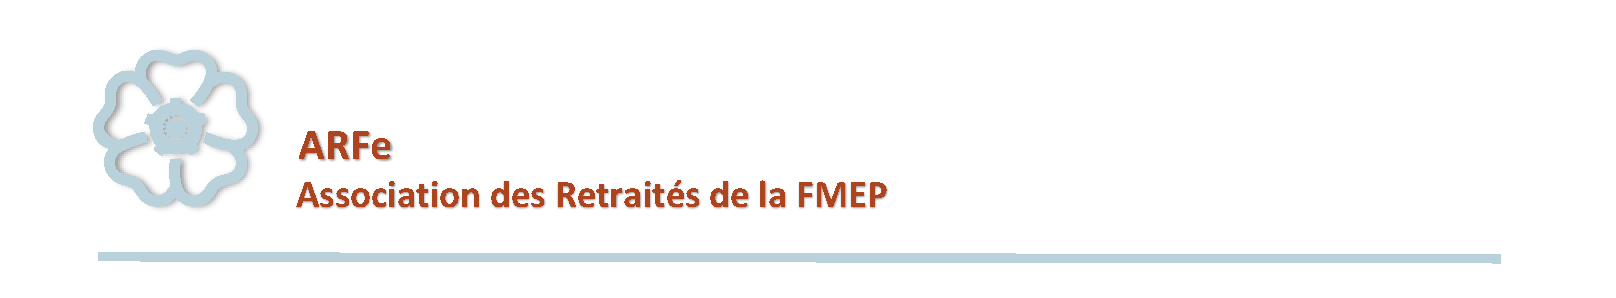 Logo ARFe FR copy